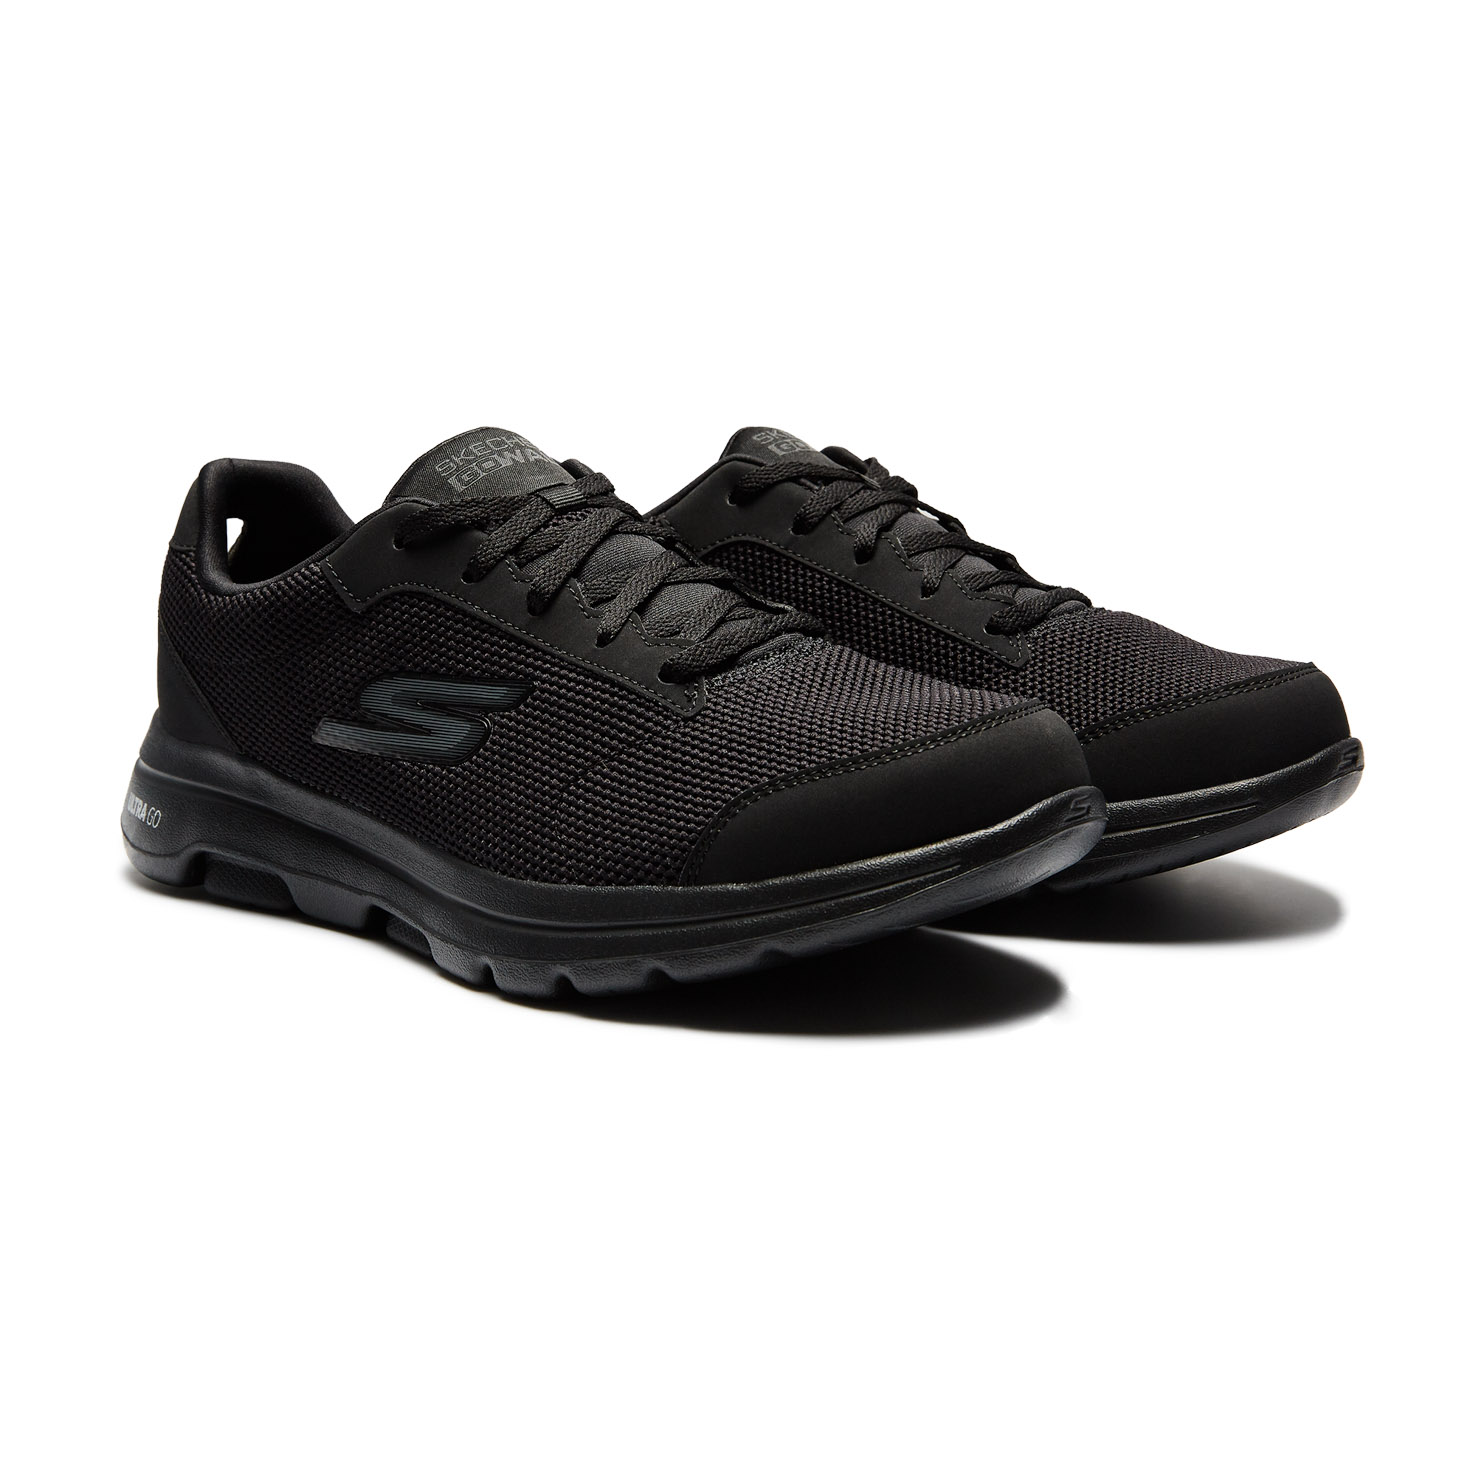 Men's low shoes SKECHERS, размер 40, цвет черный SK55519 - фото 2